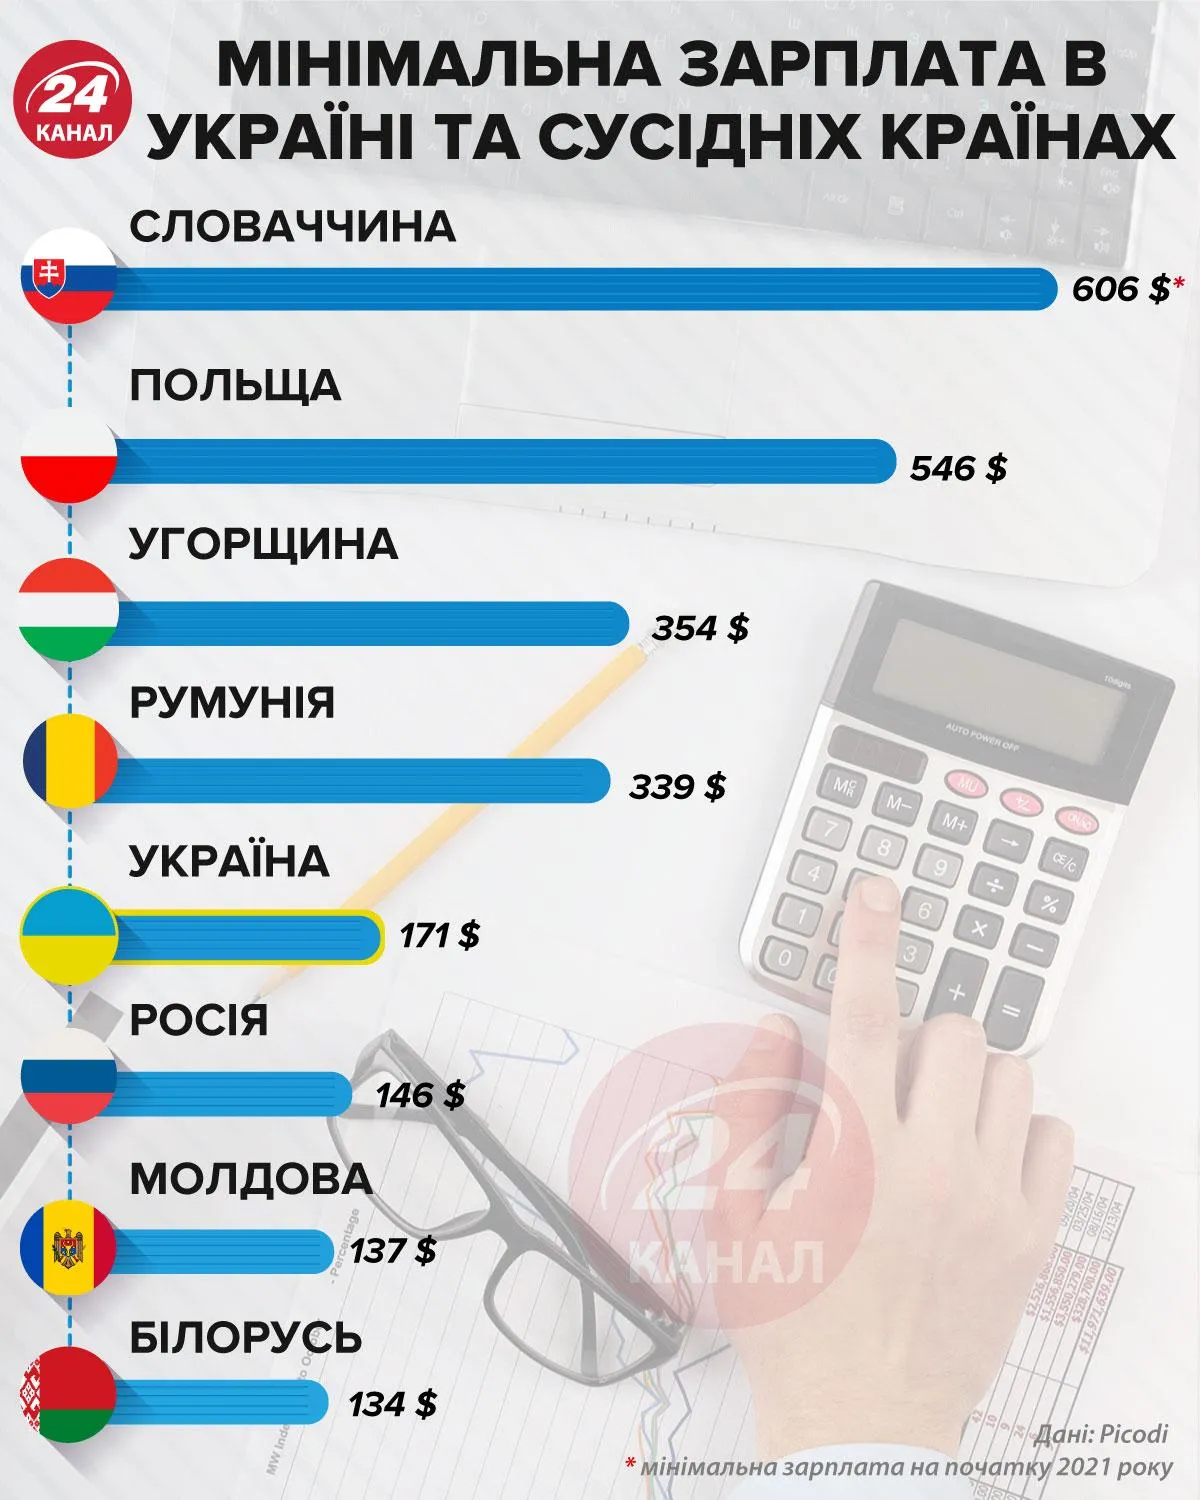 Мінімальна зарплата в Україні та сусідніх країна інфографіка 24 канал